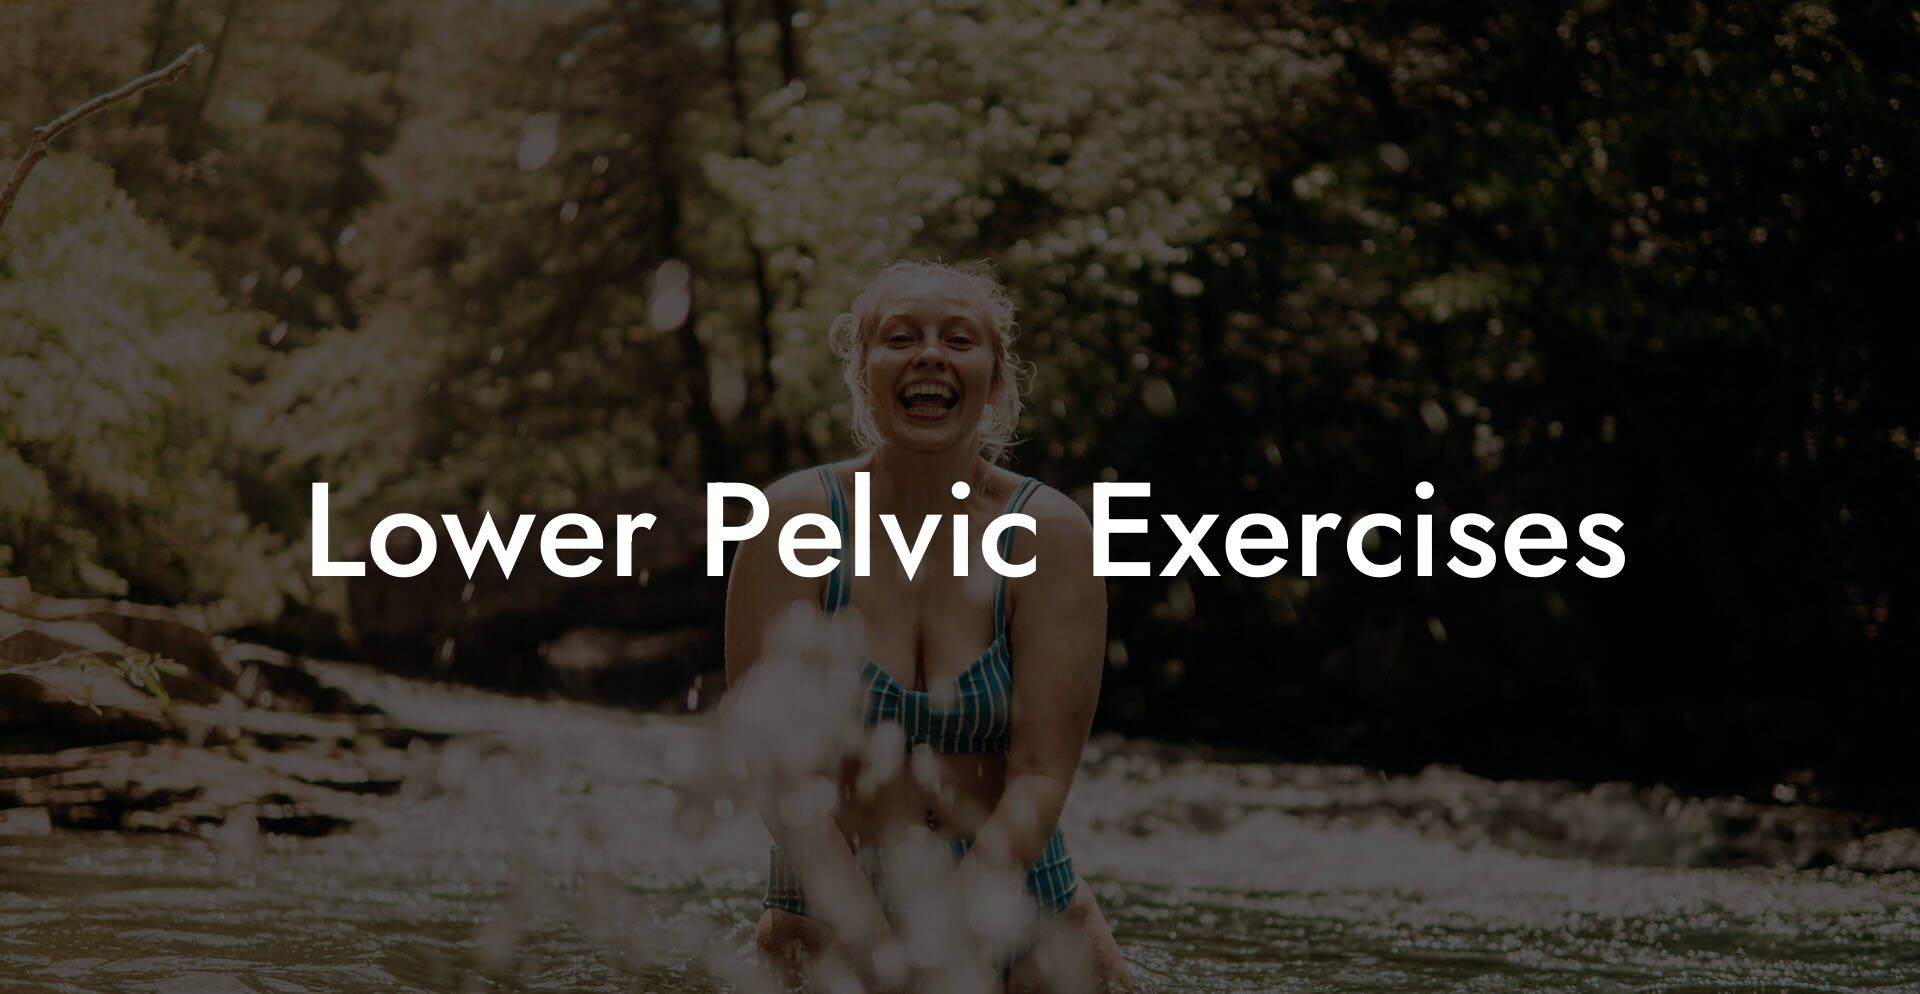 Lower Pelvic Exercises